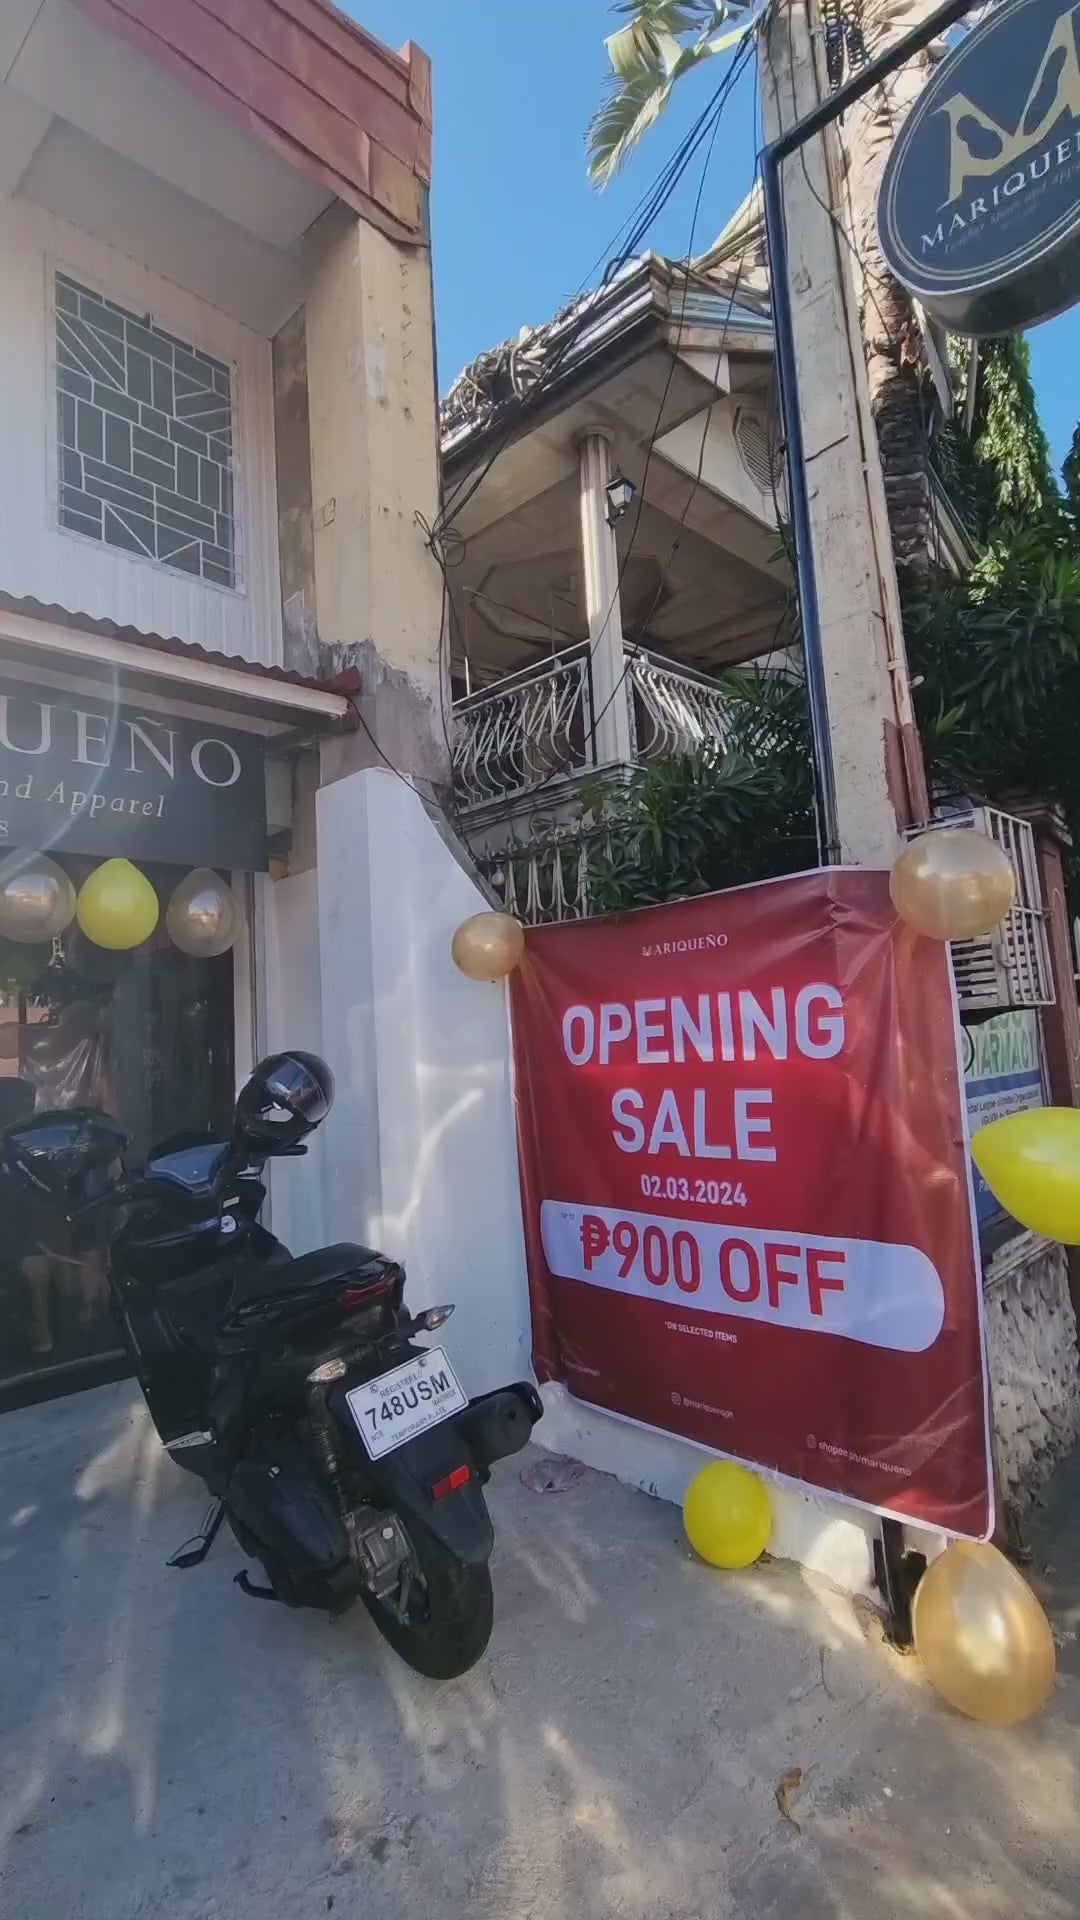 Load video: Come and visit out store at 15 A De Guzman Interior, Concepcion Uno, Parang Marikina City 1800